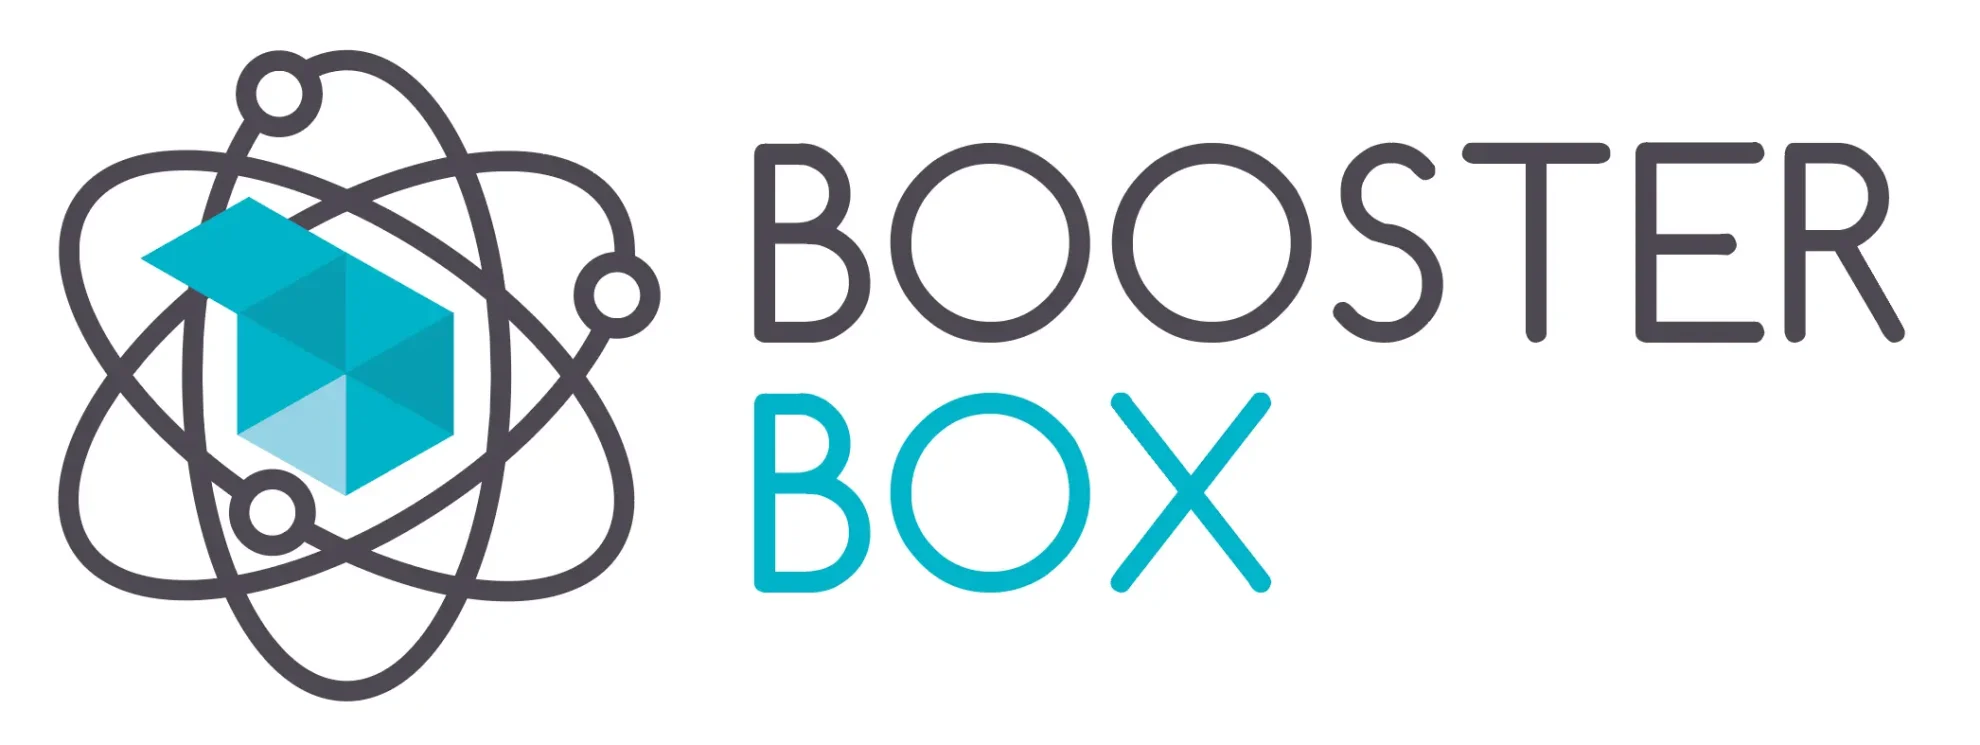 rome business school partner booster box logo